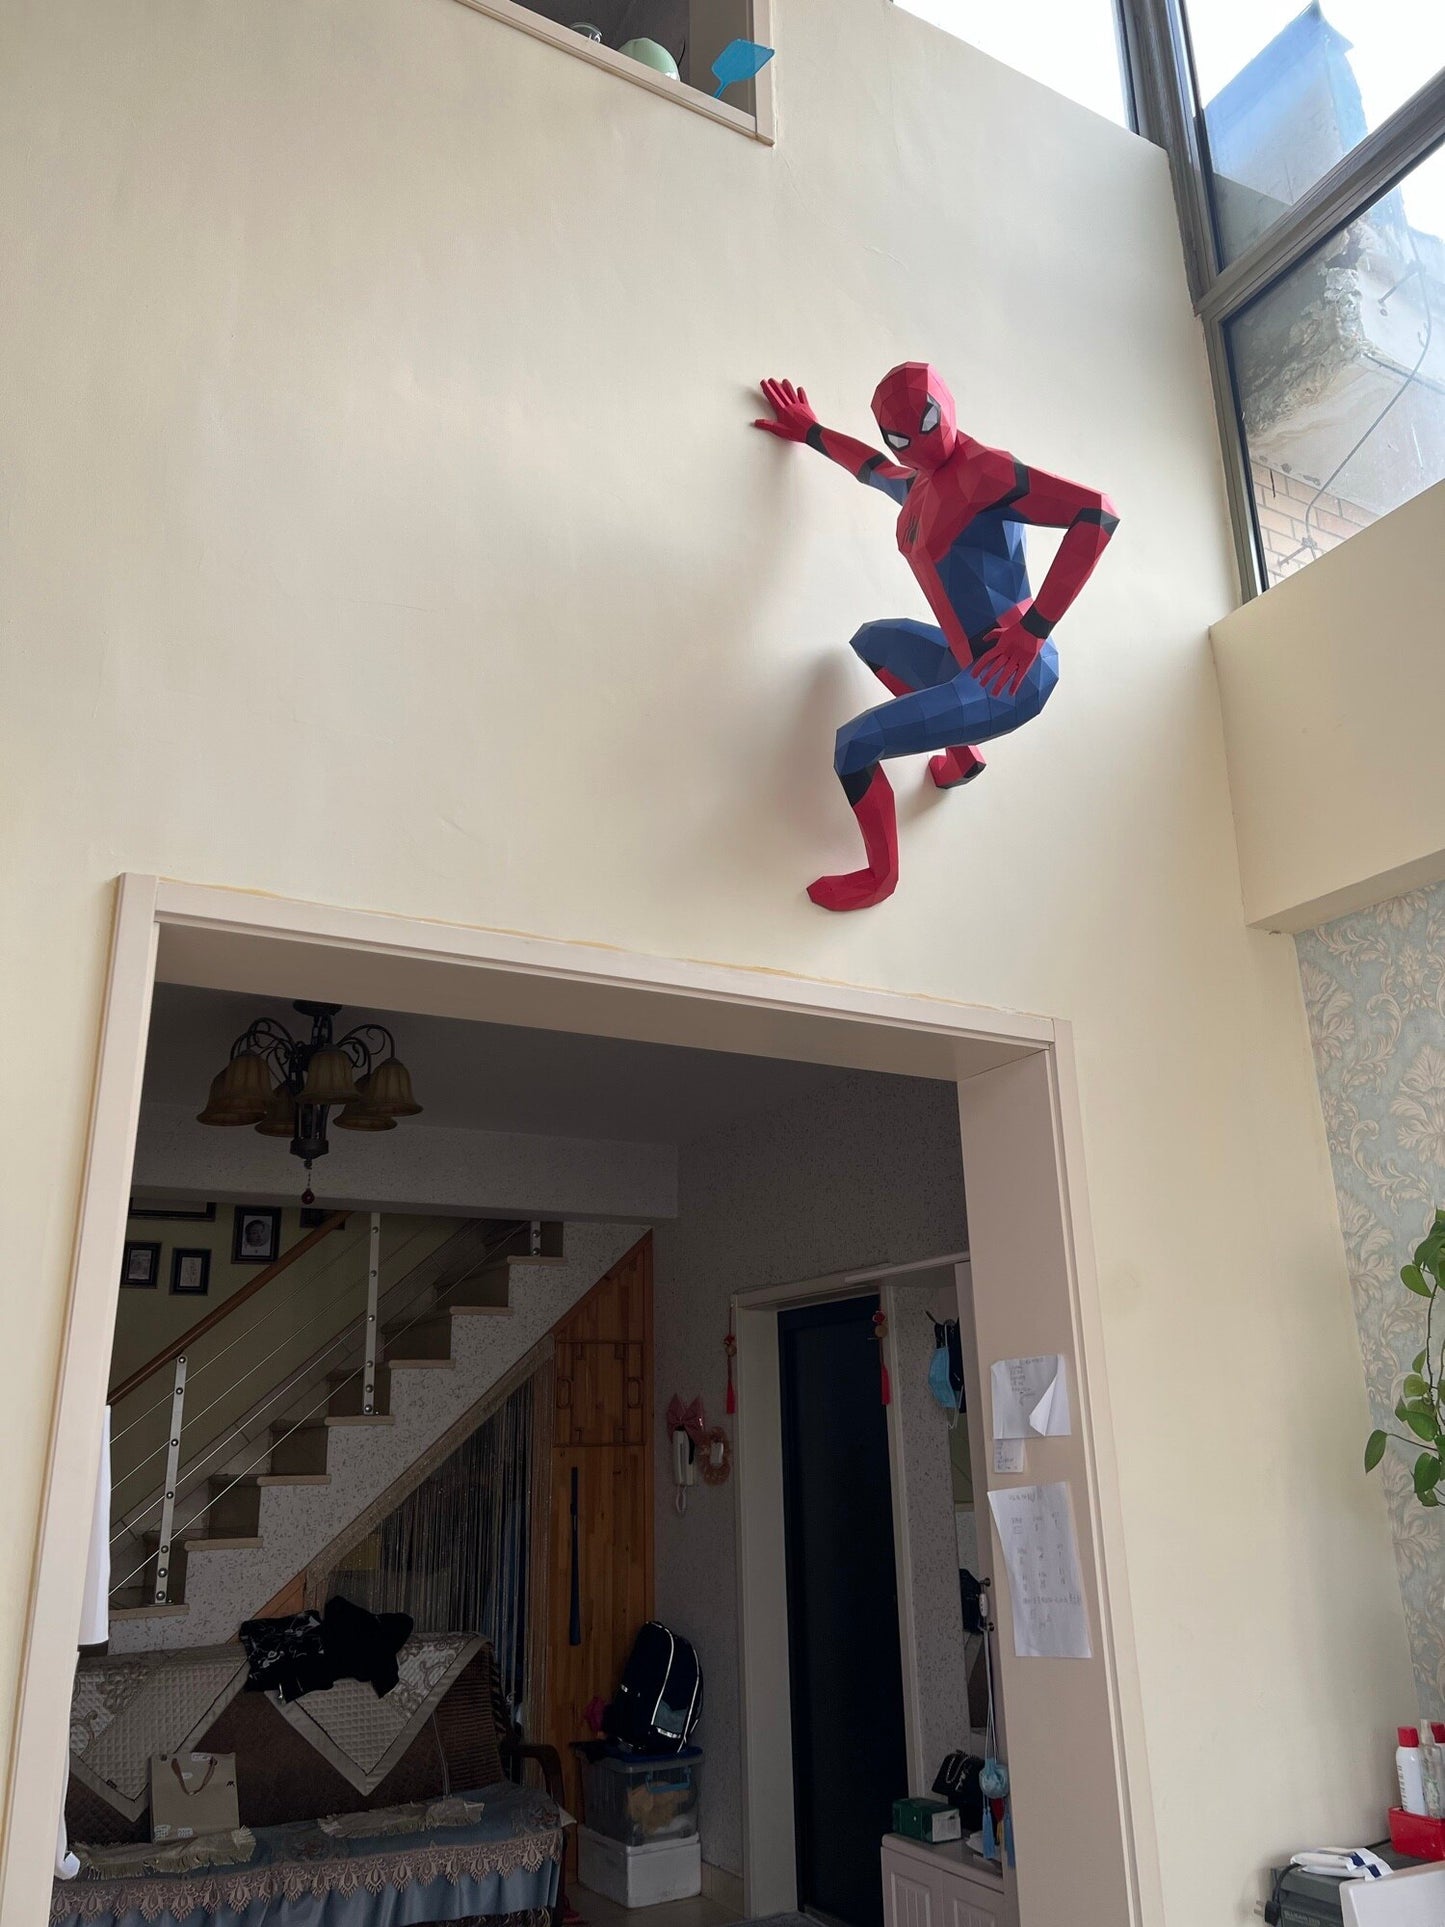 3D DIY Paper model of Avengers Spiderman: 80 cm or 120 cm